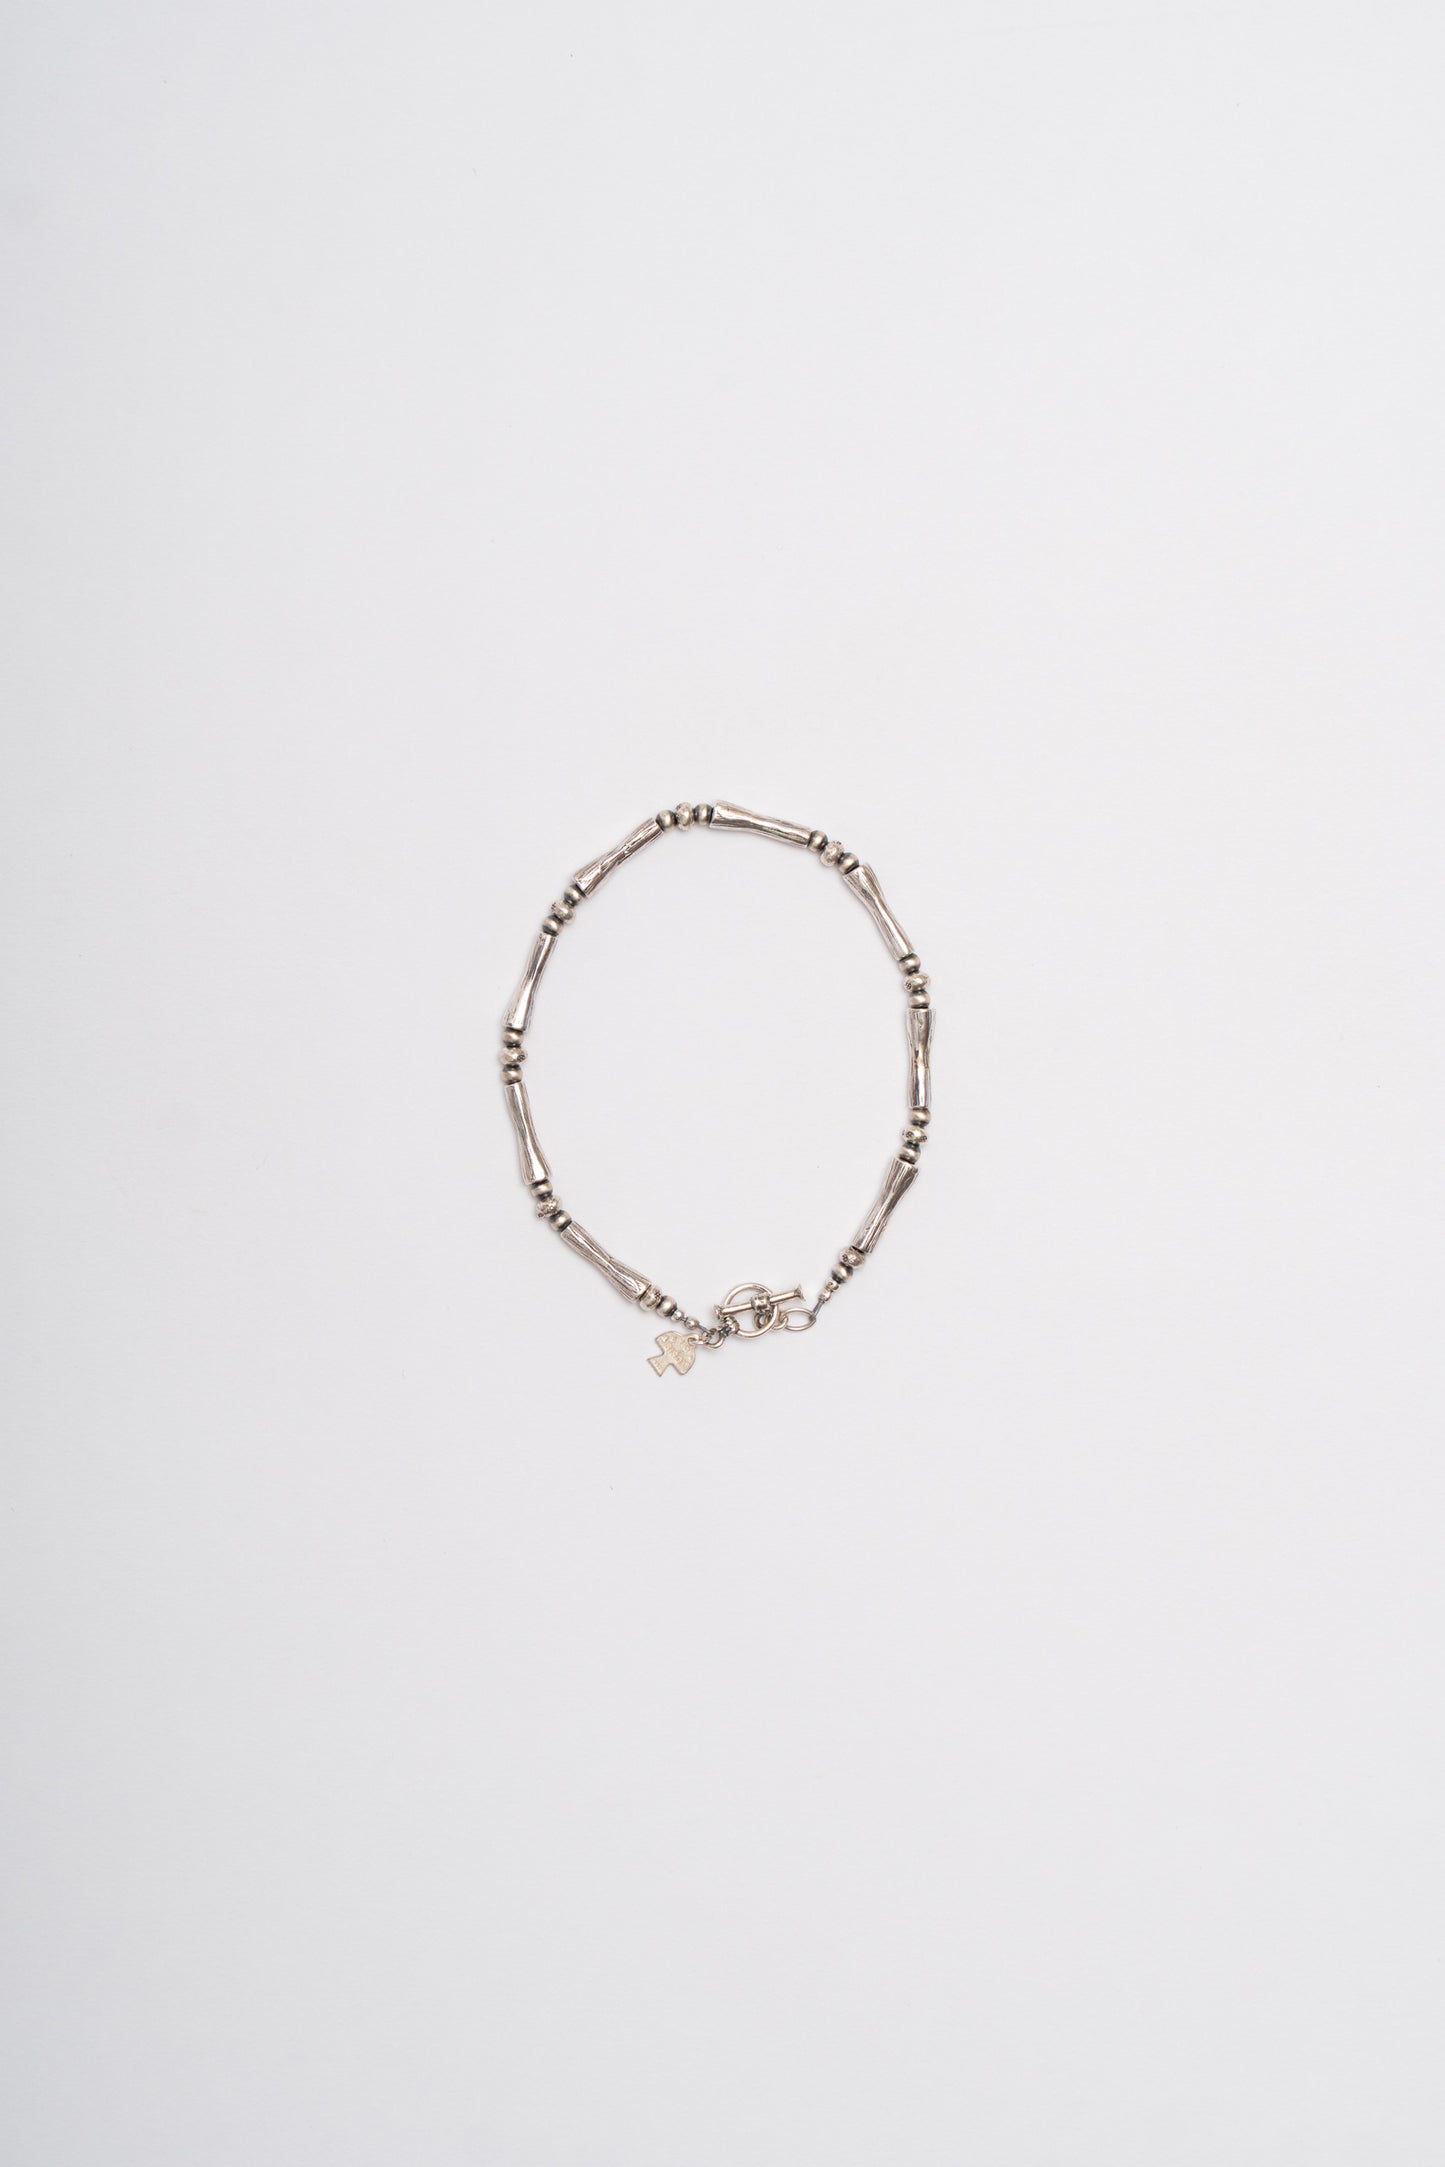 Peyote Bird - Silver Bamboo Bracelet